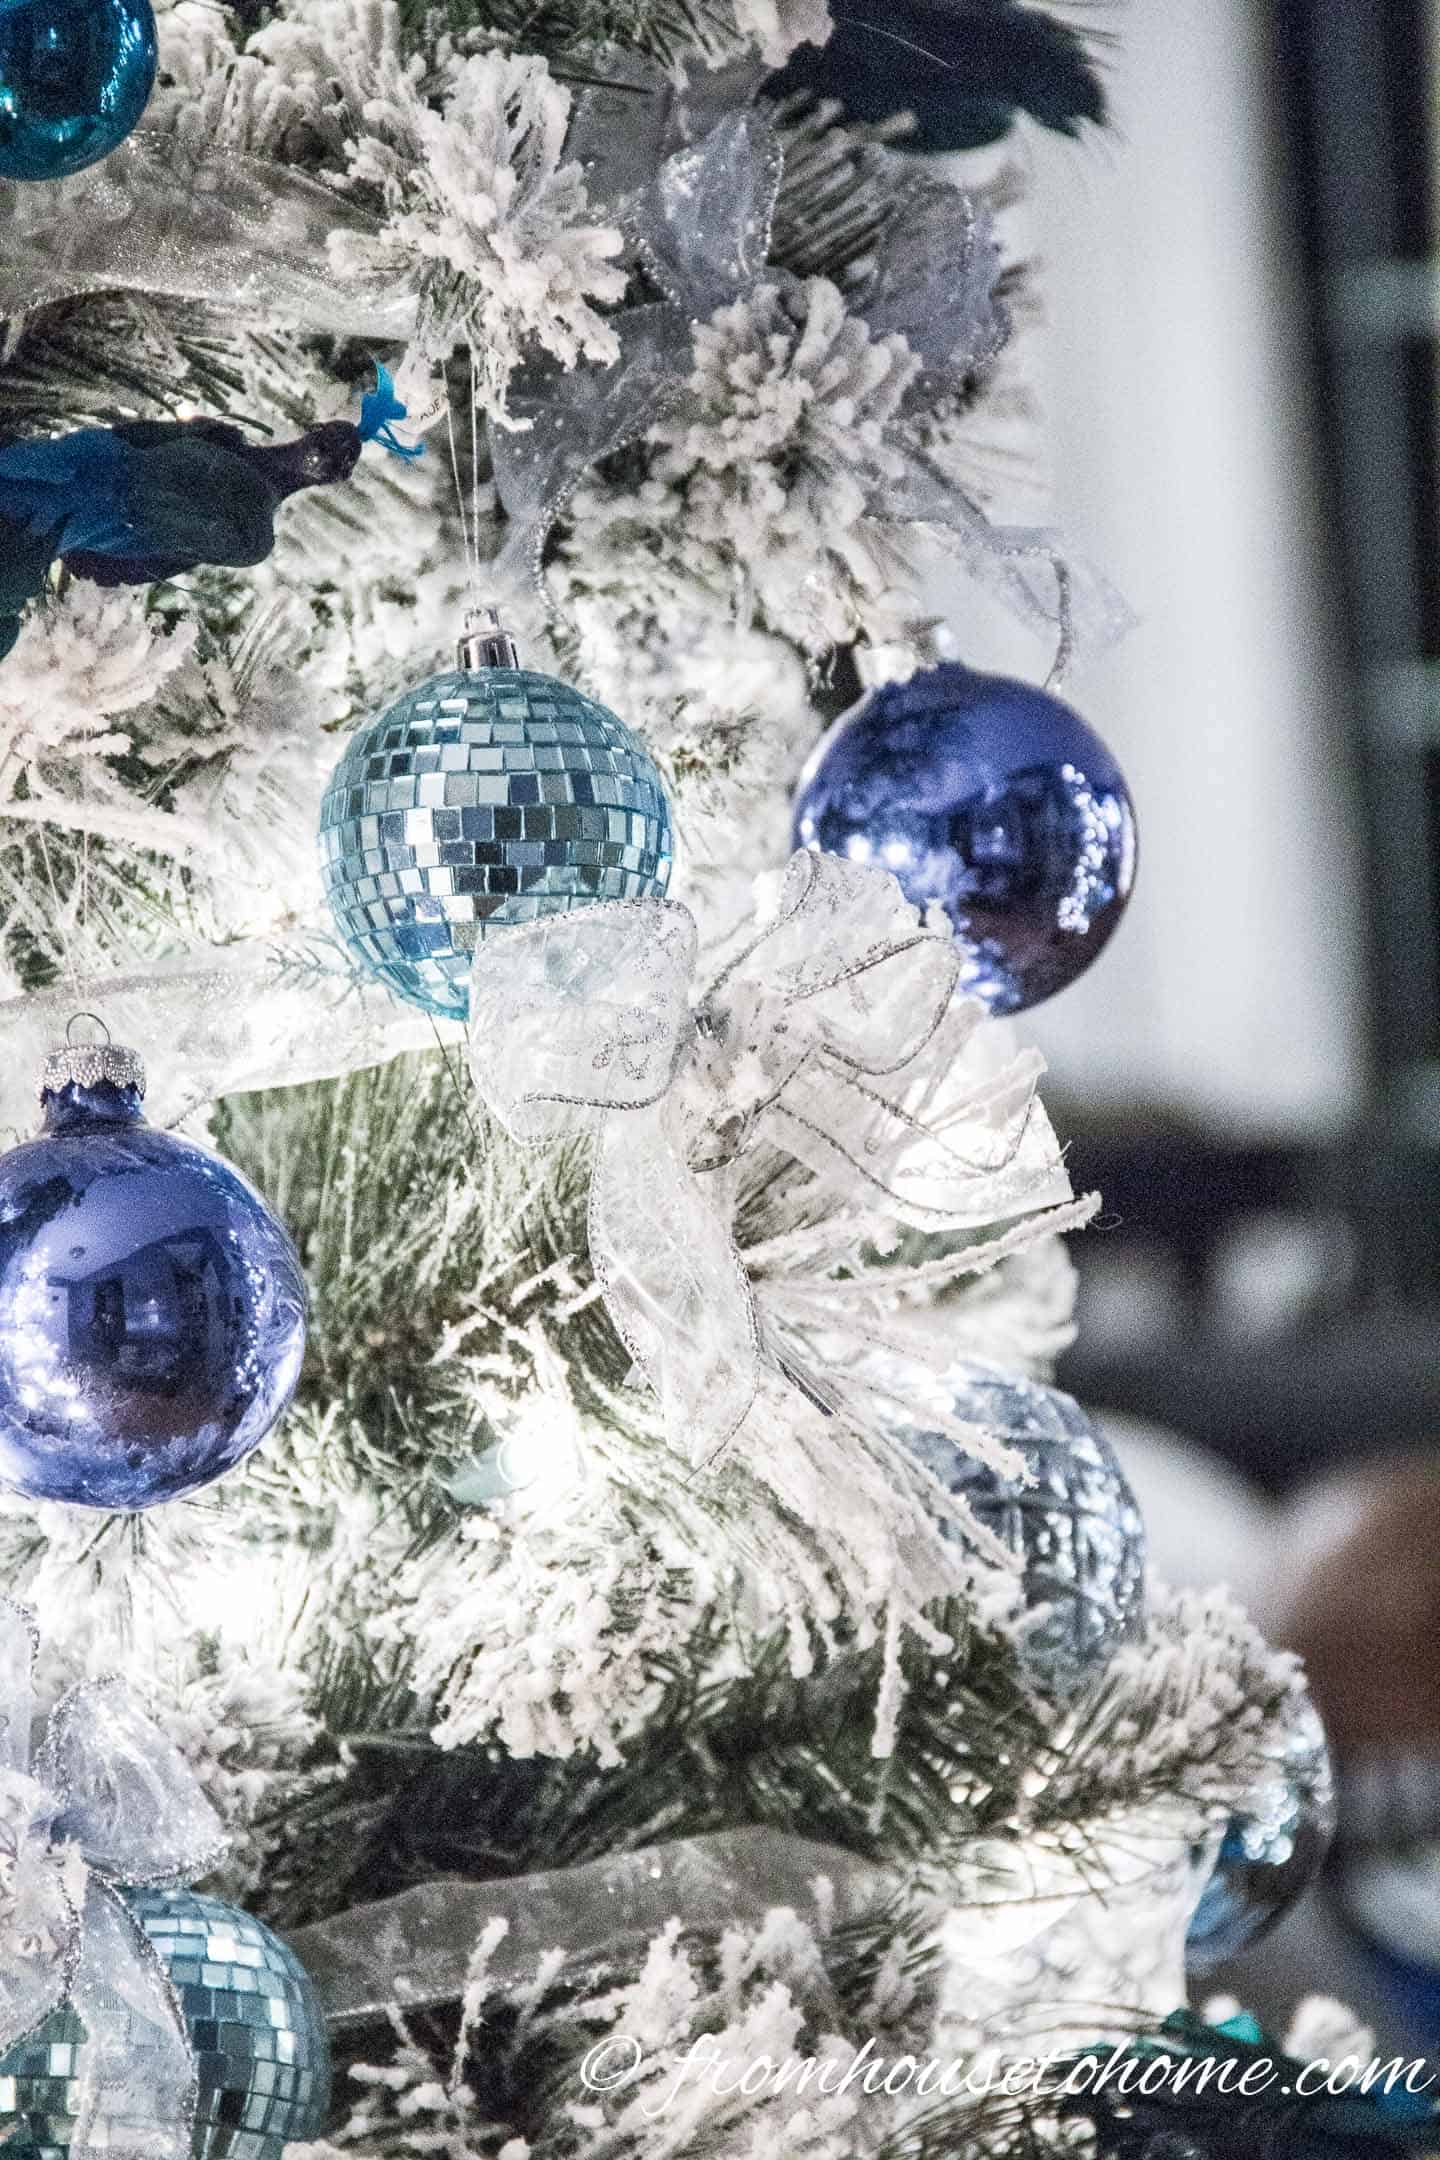 Blue Christmas ornaments on a flocked Christmas tree